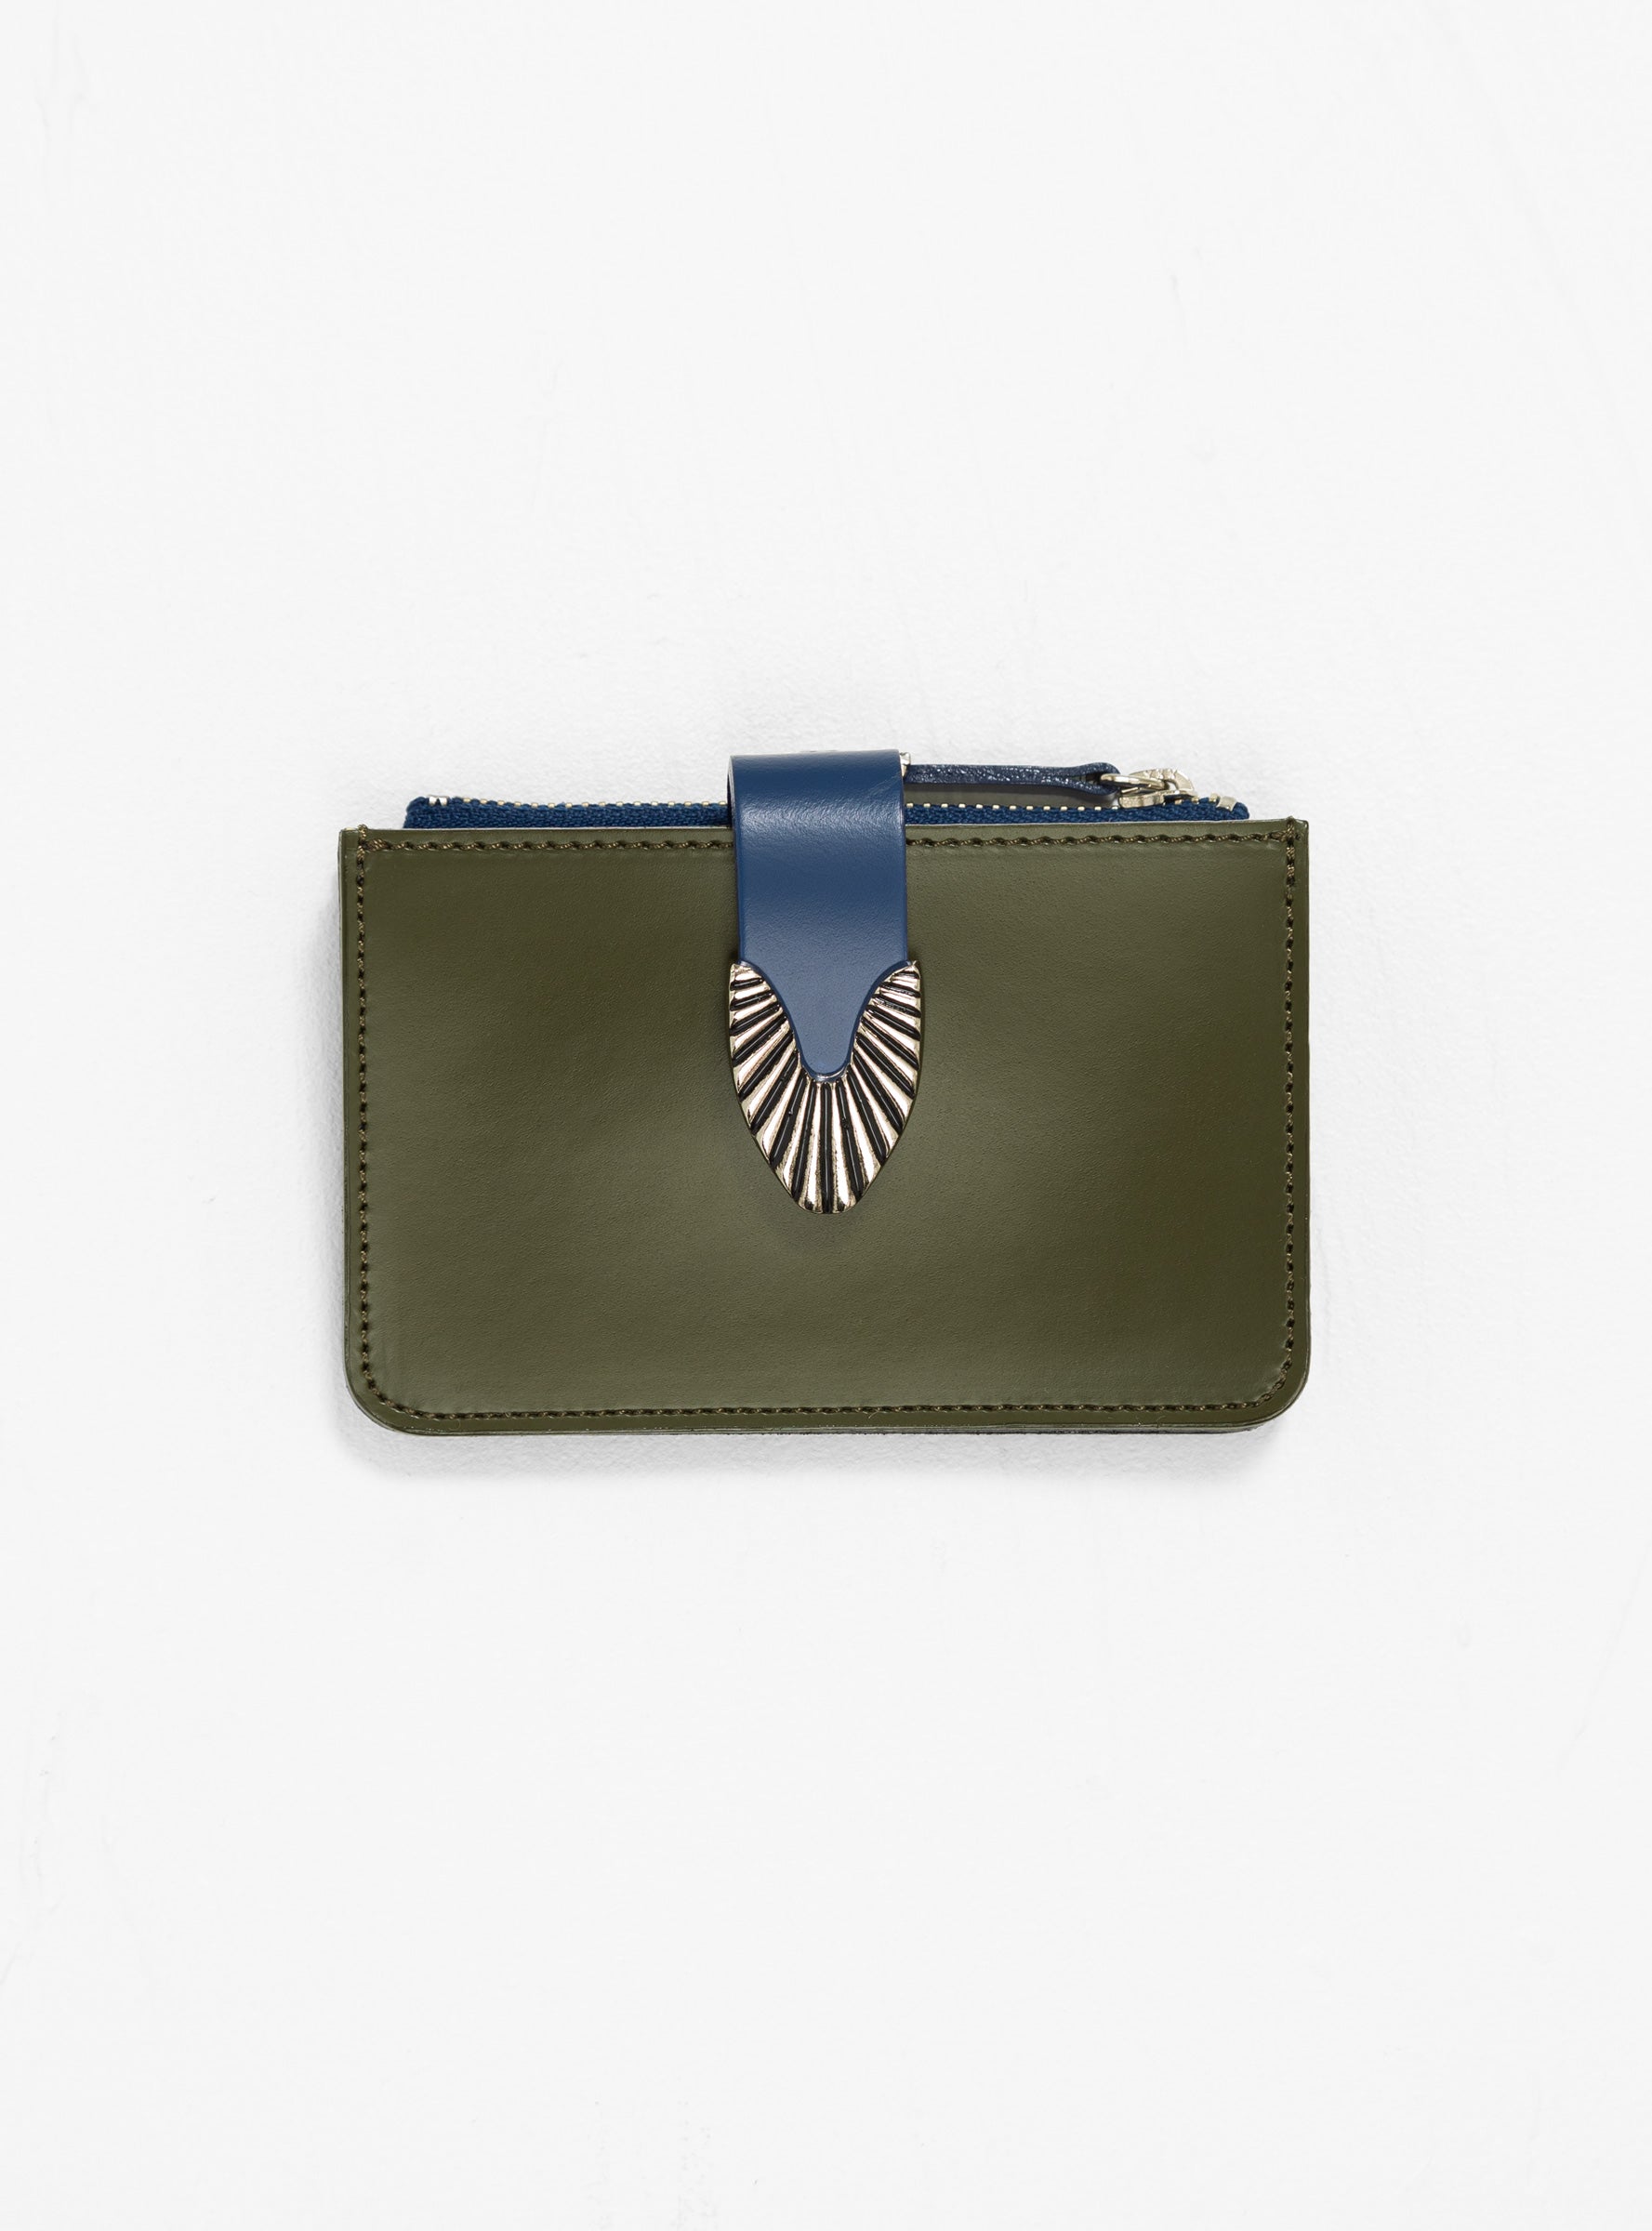 Adele mini Folding Wallet Use box / Imported branded Women's